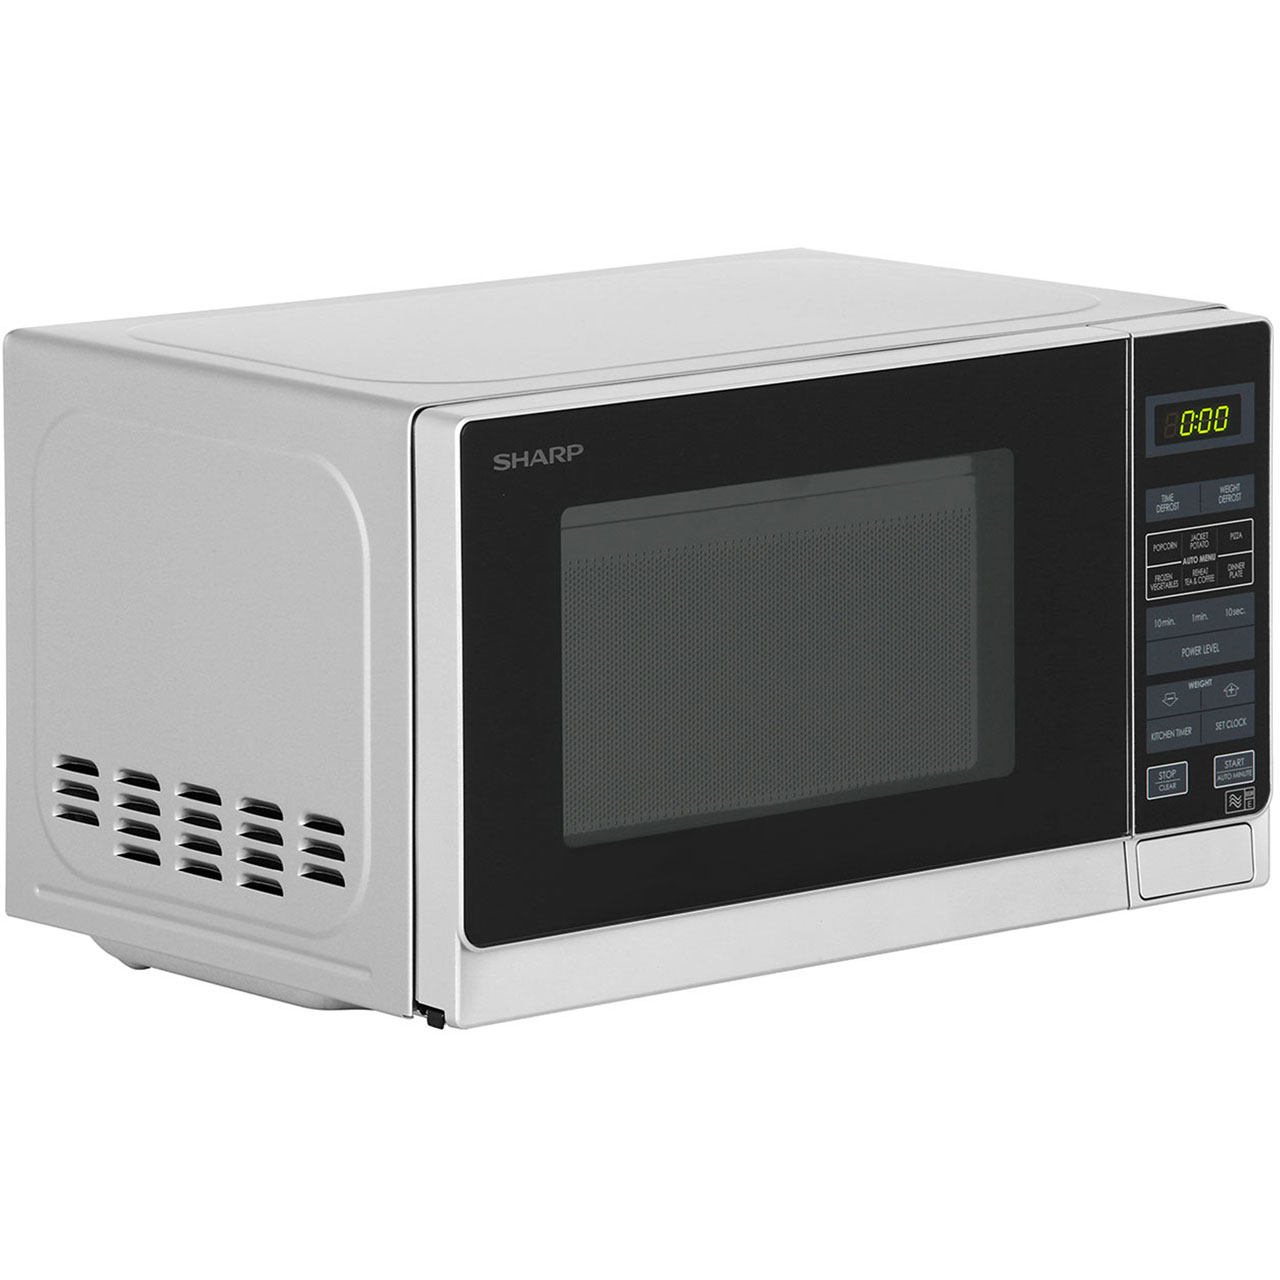 Sharp Microwave R272KM 800 Watt Microwave Black New from AO | eBay